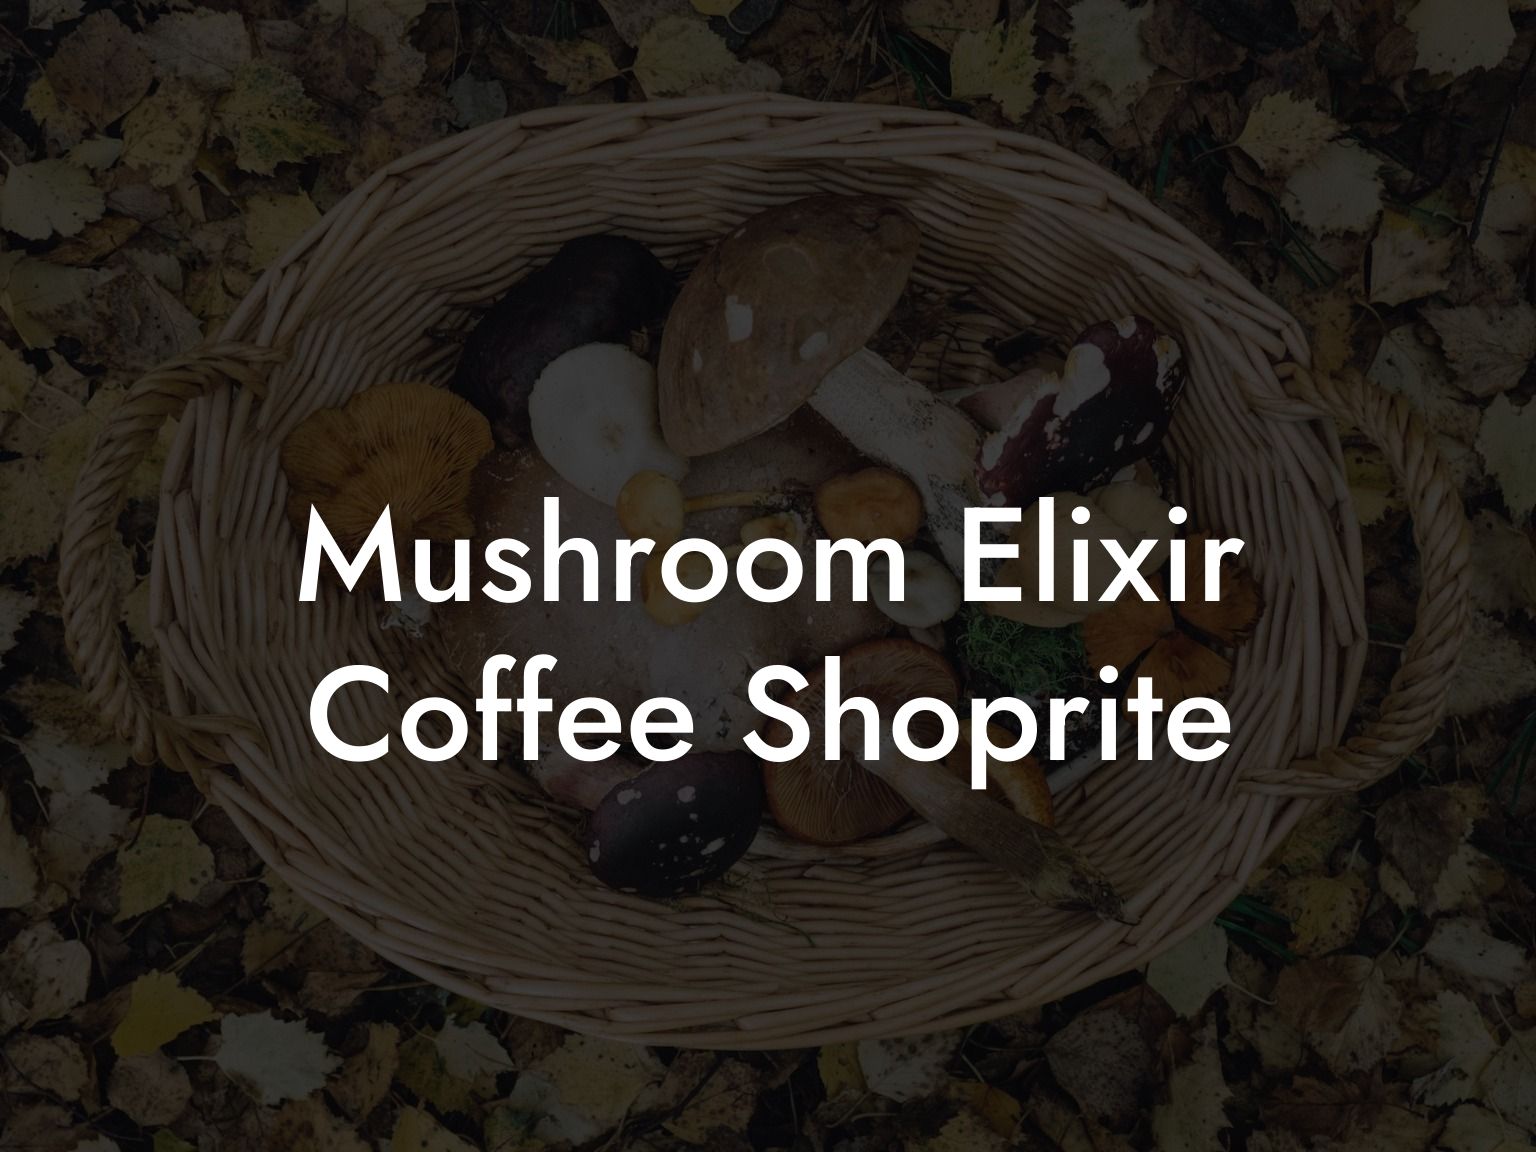 Mushroom Elixir Coffee Shoprite